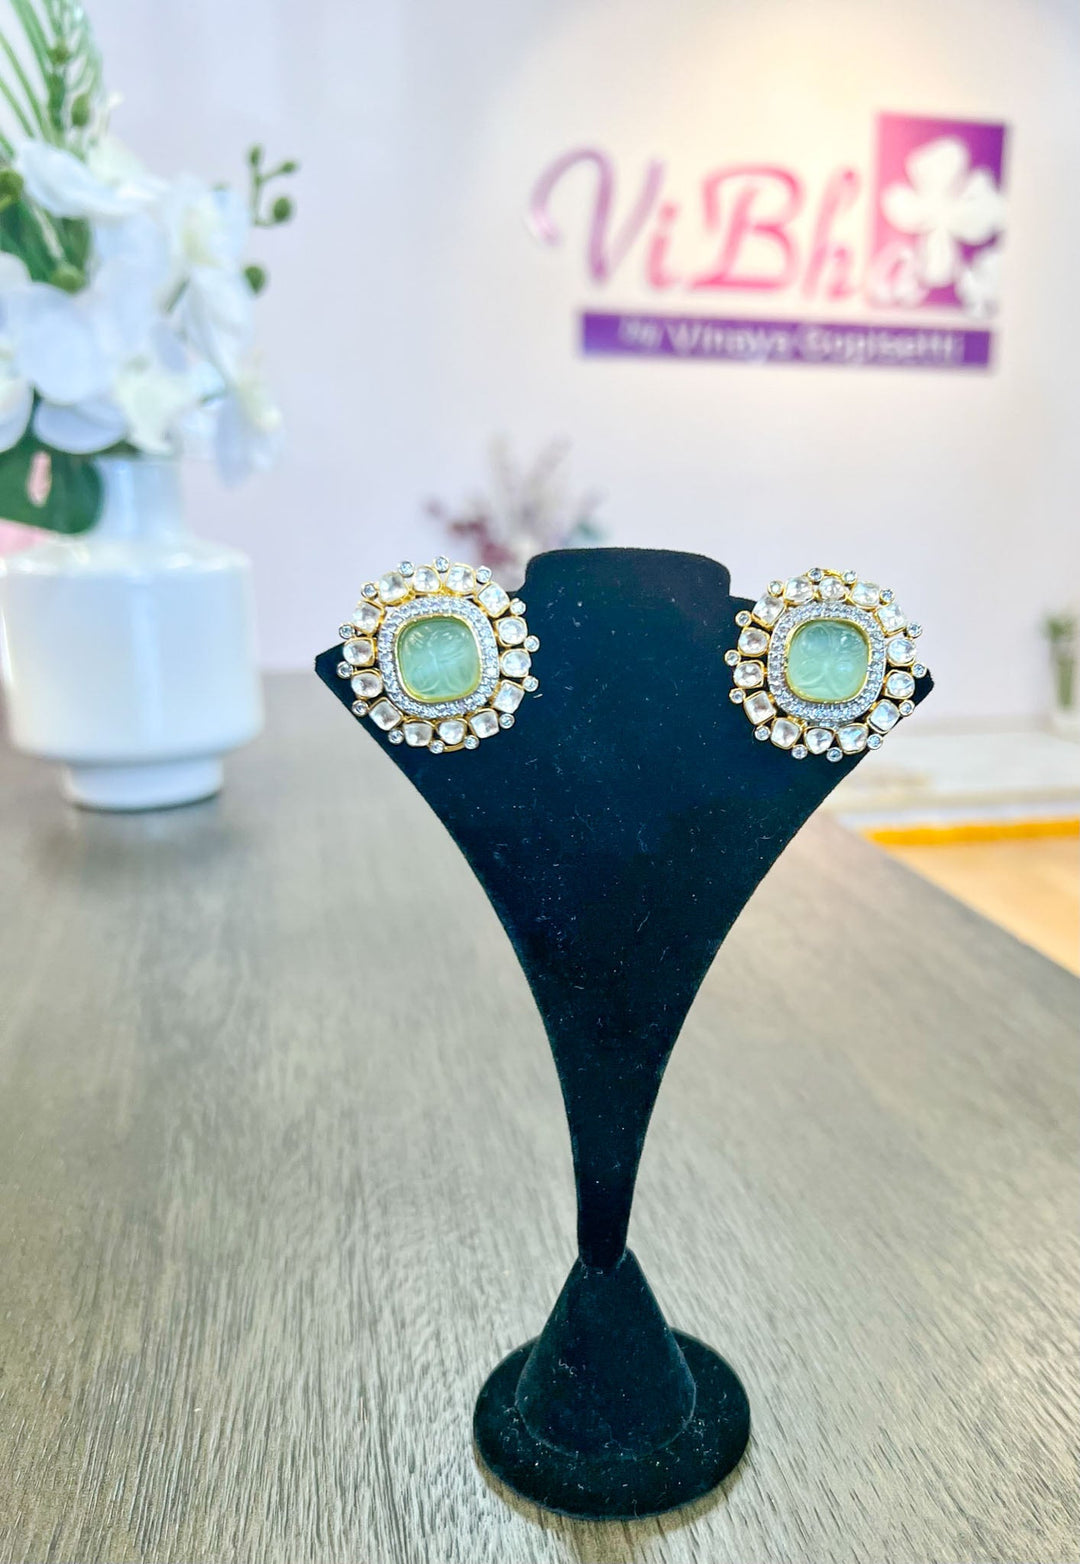 Accessories & Jewelry - Jade Stud Earrings